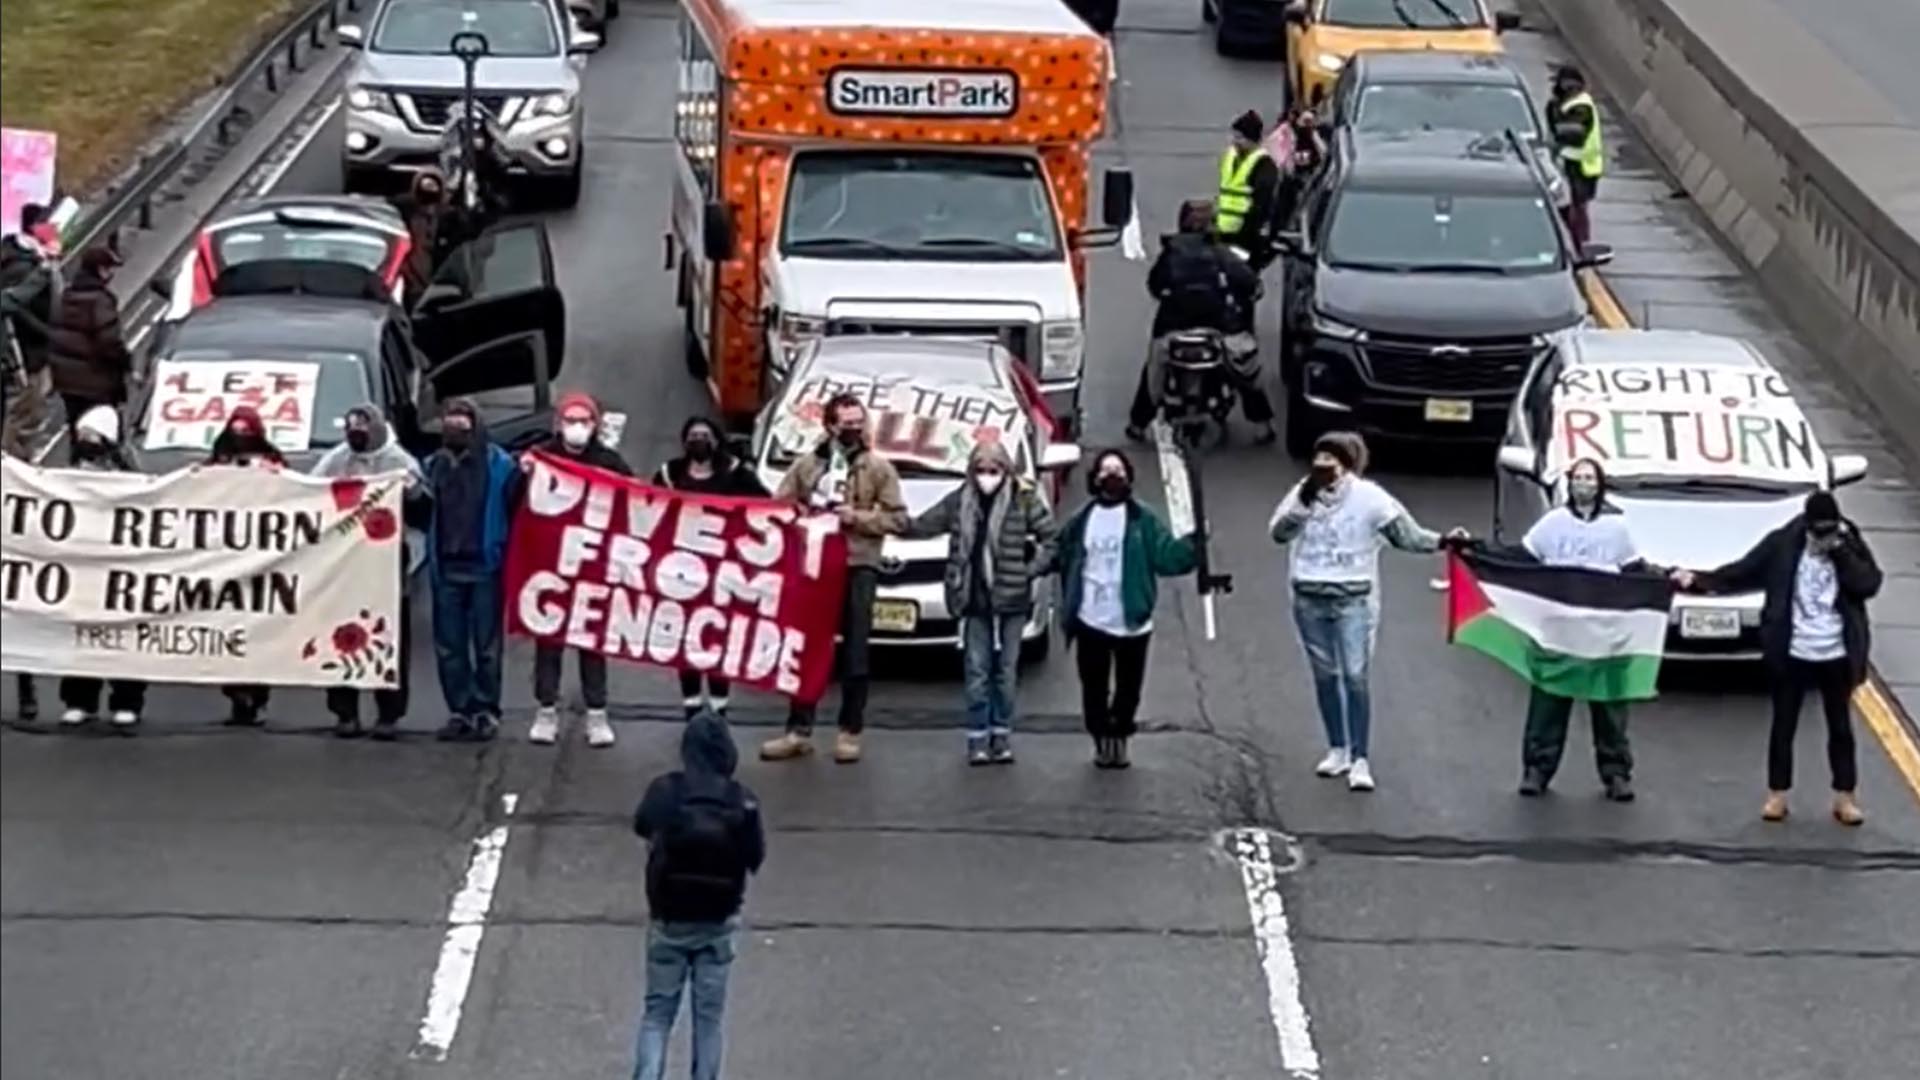 Pro-Palestine activists block entrance to JFK airport | Israel-Palestine conflict